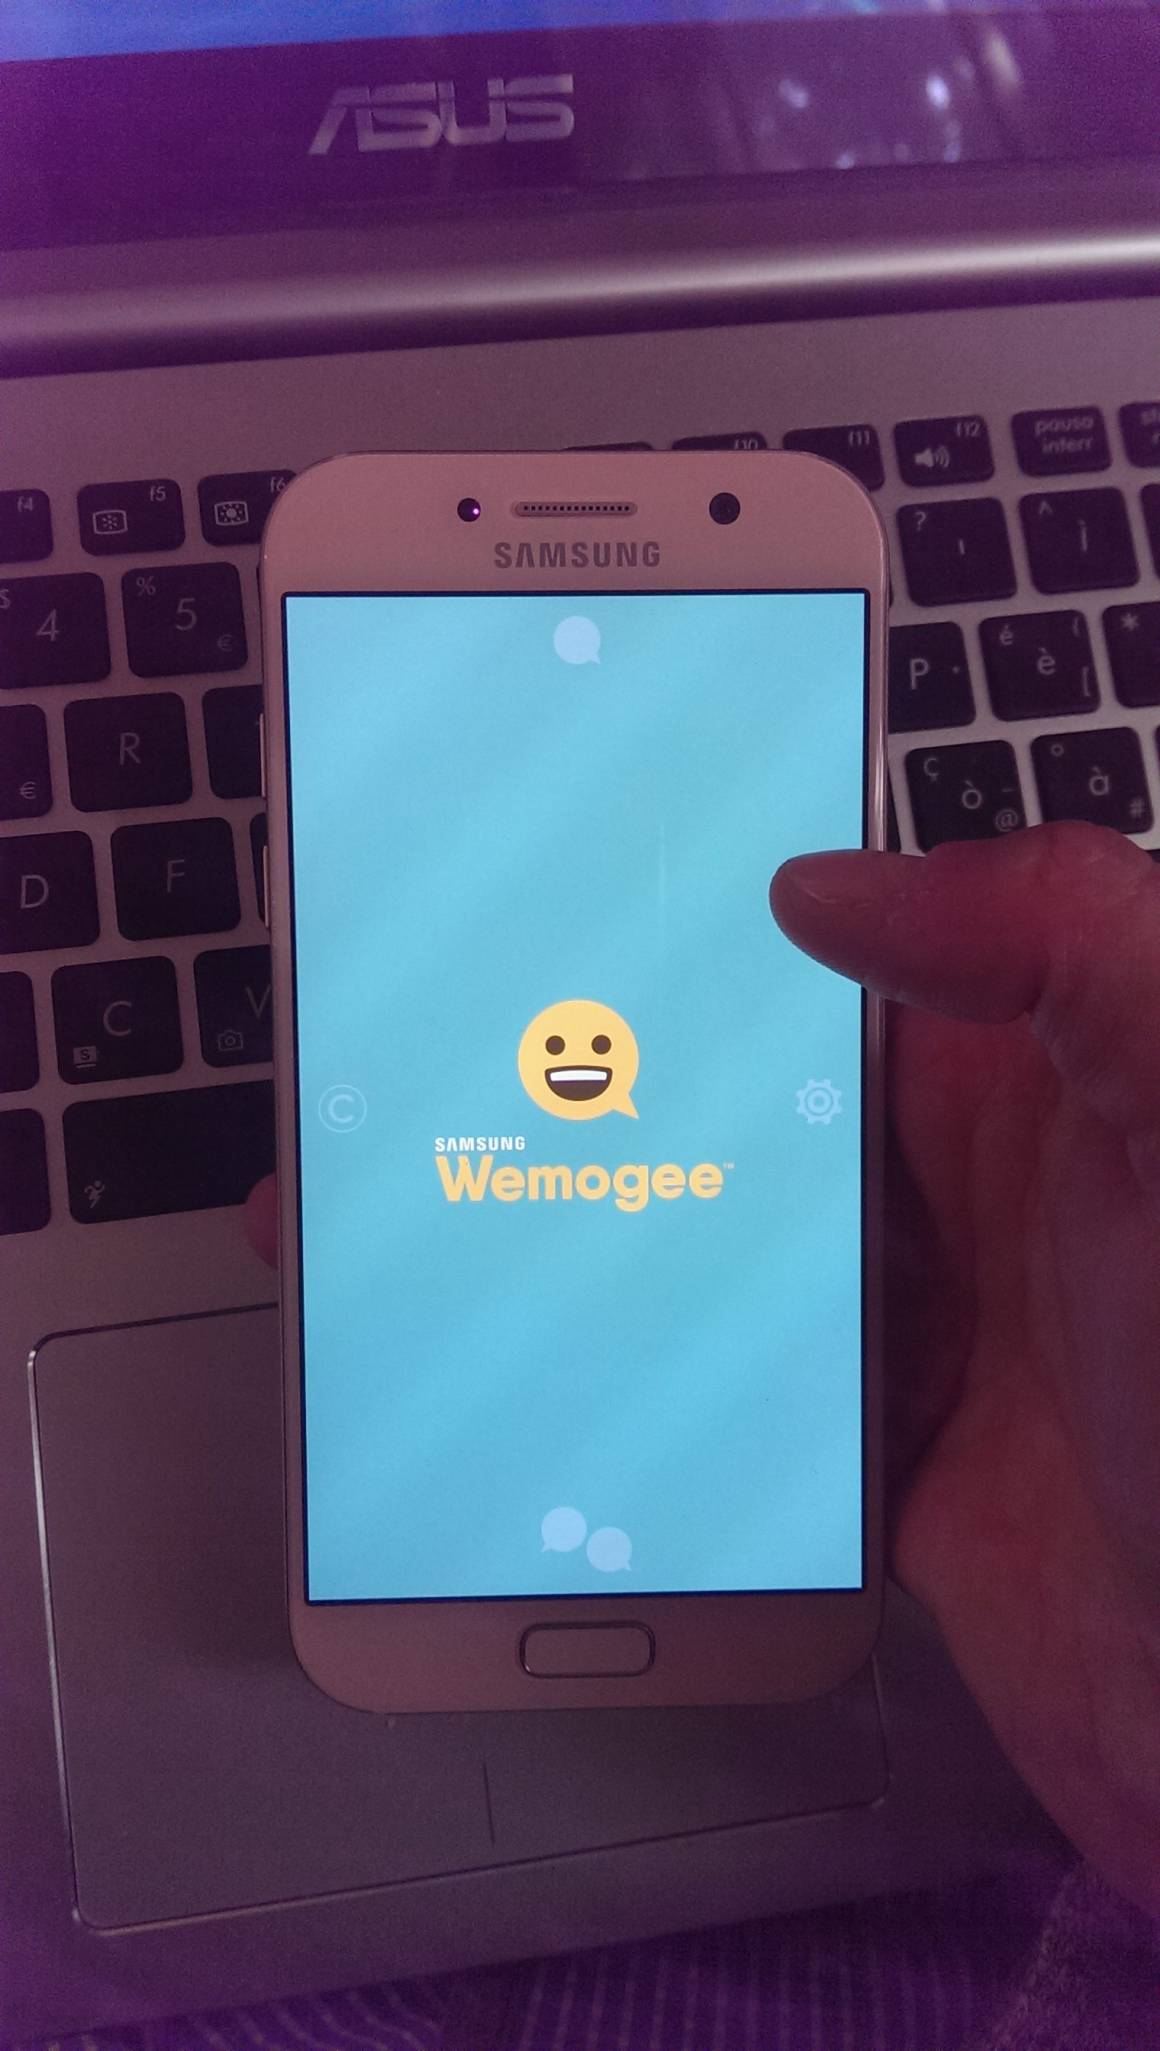 Samsung Wemogee